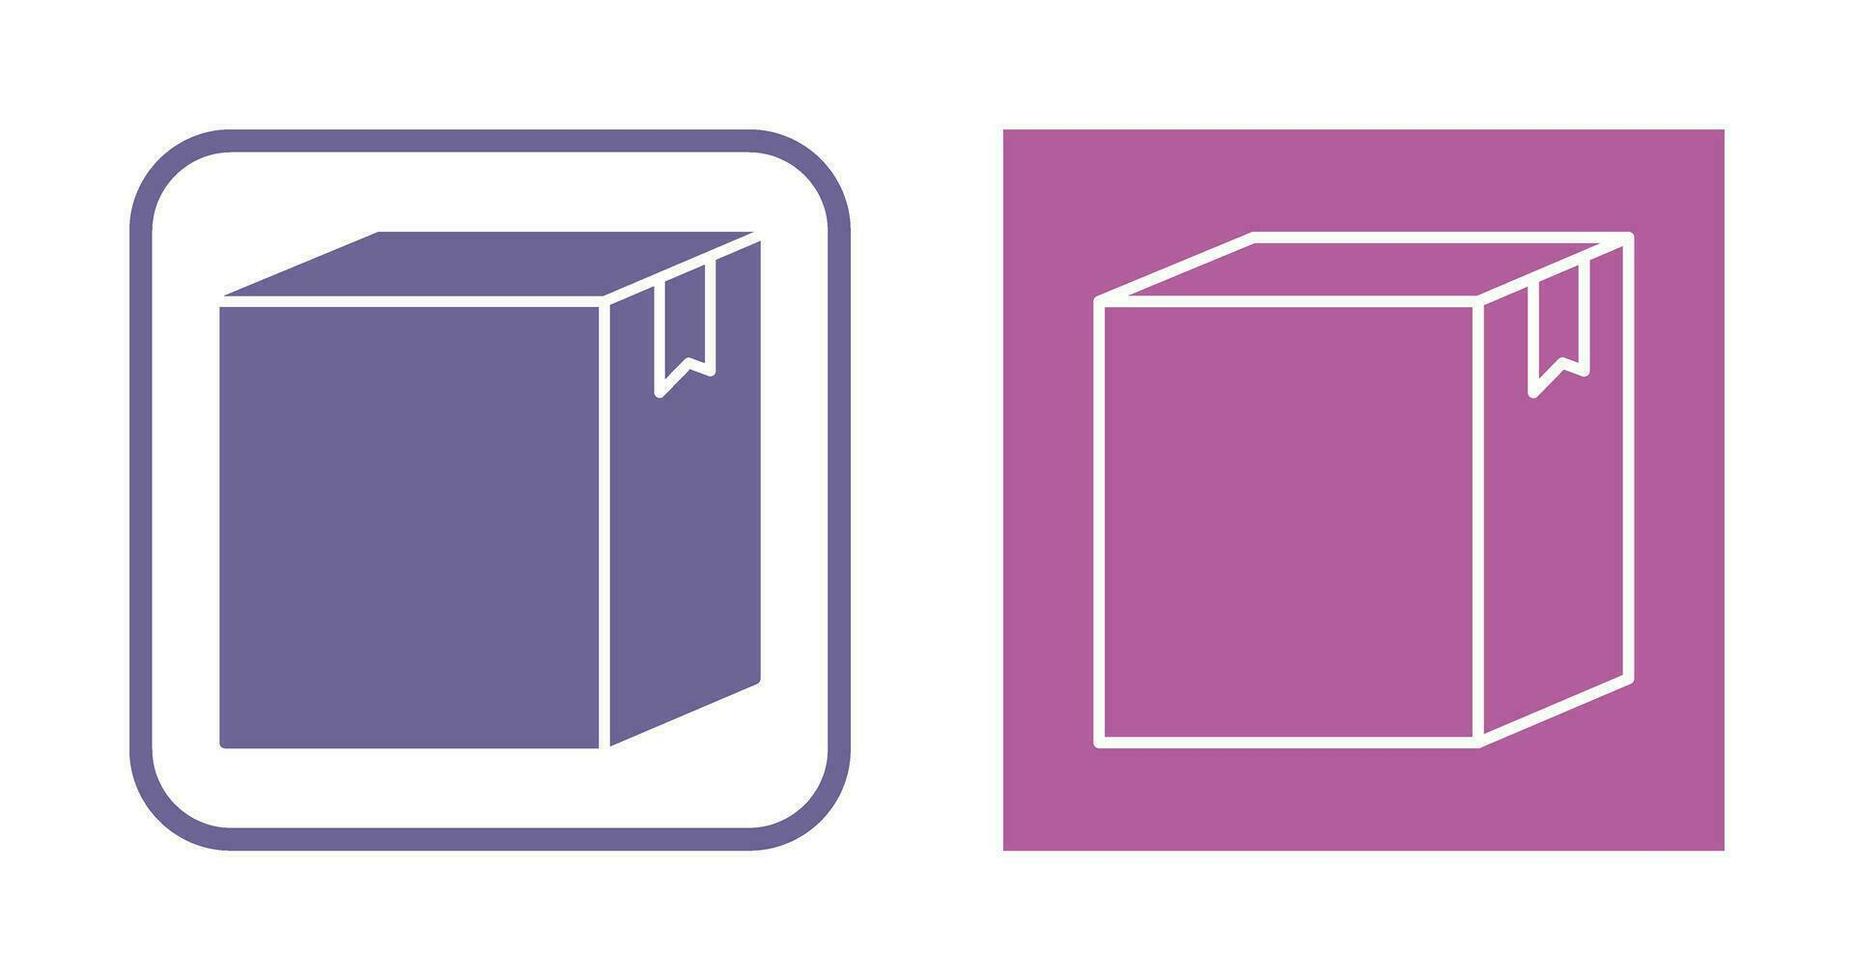 Box Vector Icon